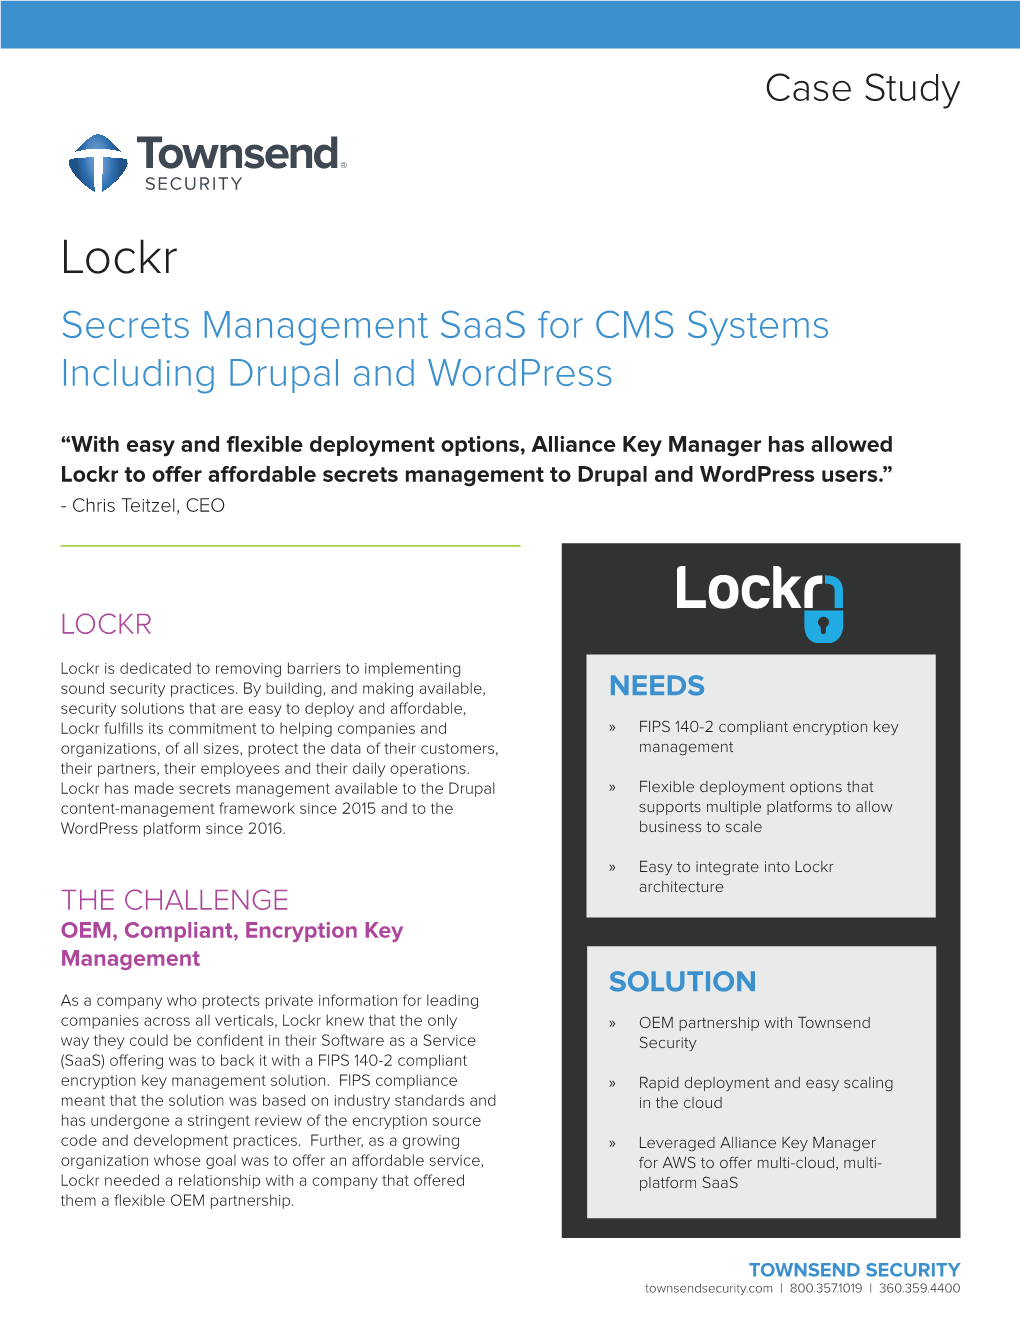 Lockr Secrets Management Saas for CMS Systems Including Drupal and Wordpress